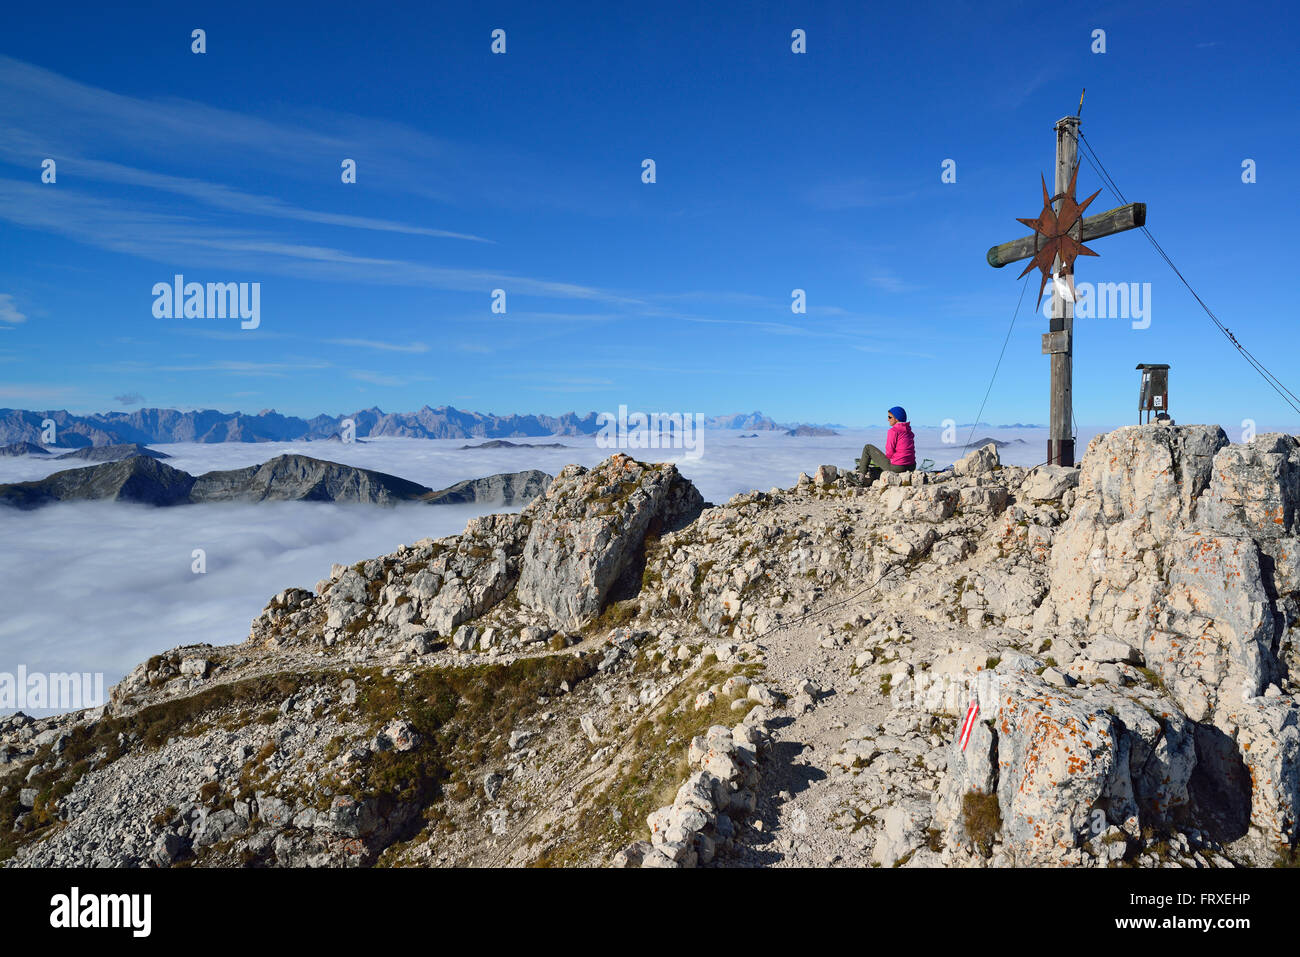 Woman sitting at summit of Guffert, mountain range in background, Brandenberg Alps Rofan, Tyrol, Austria Stock Photo